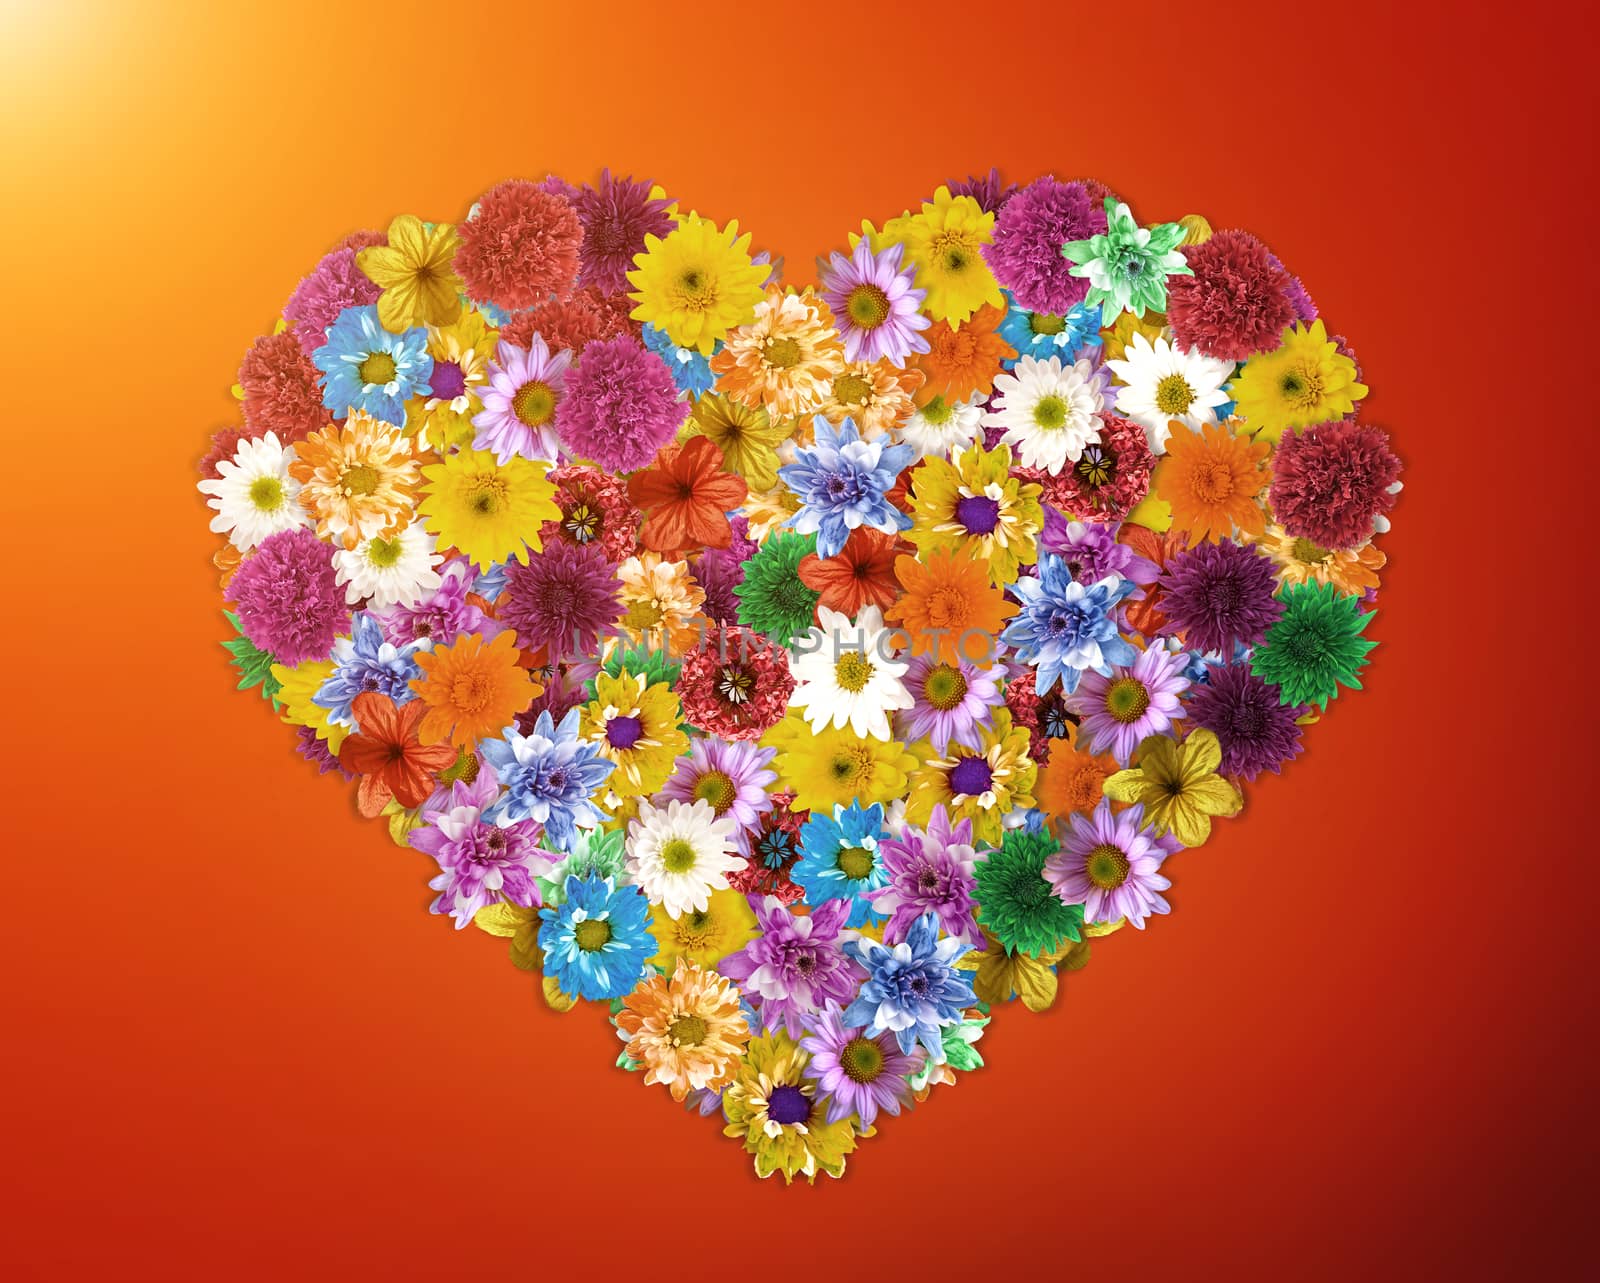 Flower arrangement is Heart-shaped- Designed for valentine's day concept.